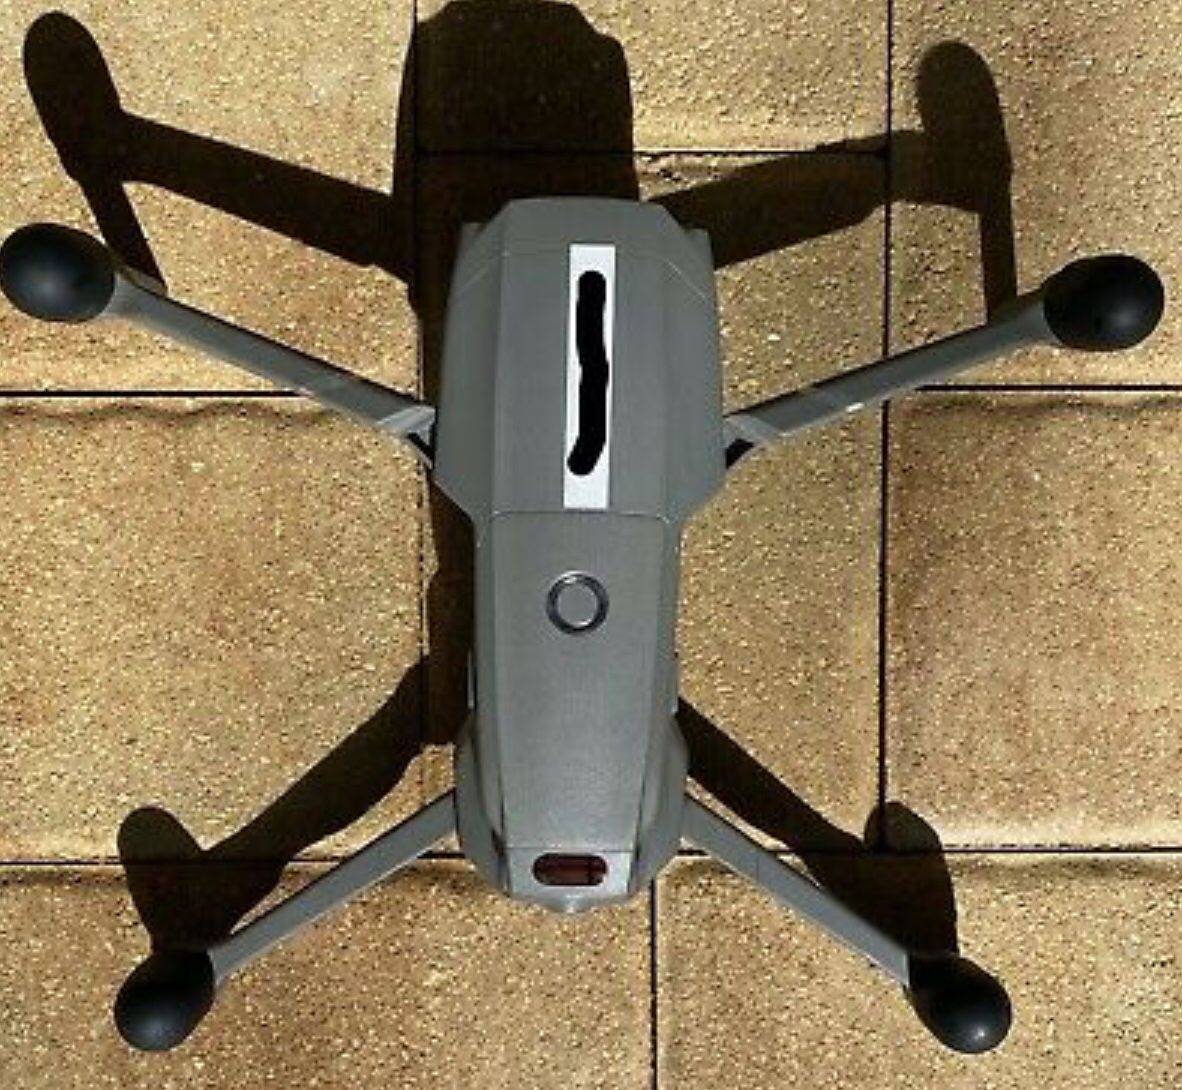 Model DJI Mavic 2 Pro Type Ready to Fly Drone Custom Bundle Yes Maximum Control Range 10000 m